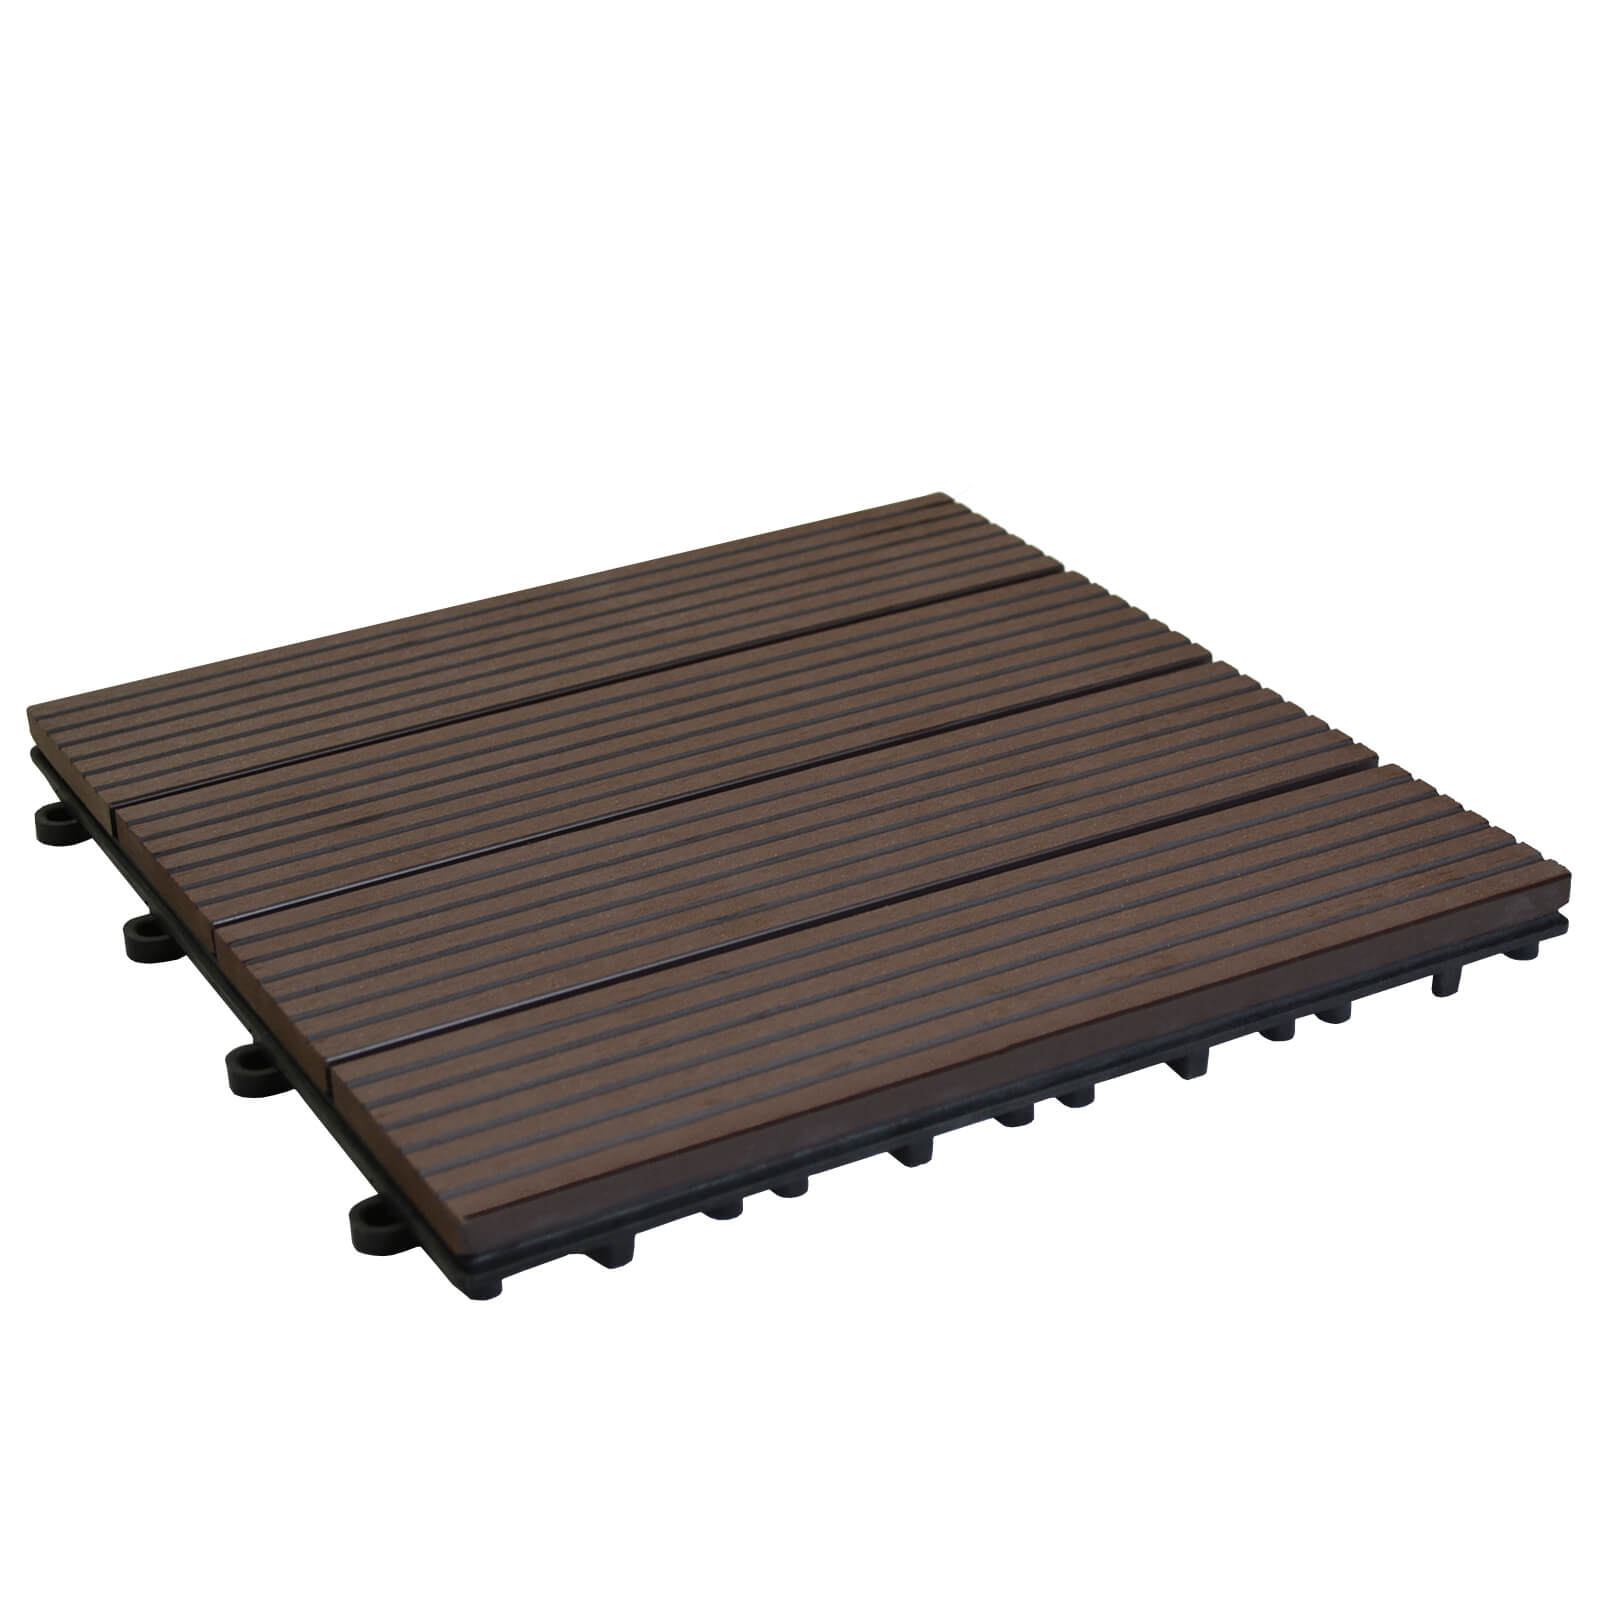 Photo of Composite Deck Tile Set 30 X 30cm - Redwood - 1 Sqm Coverage